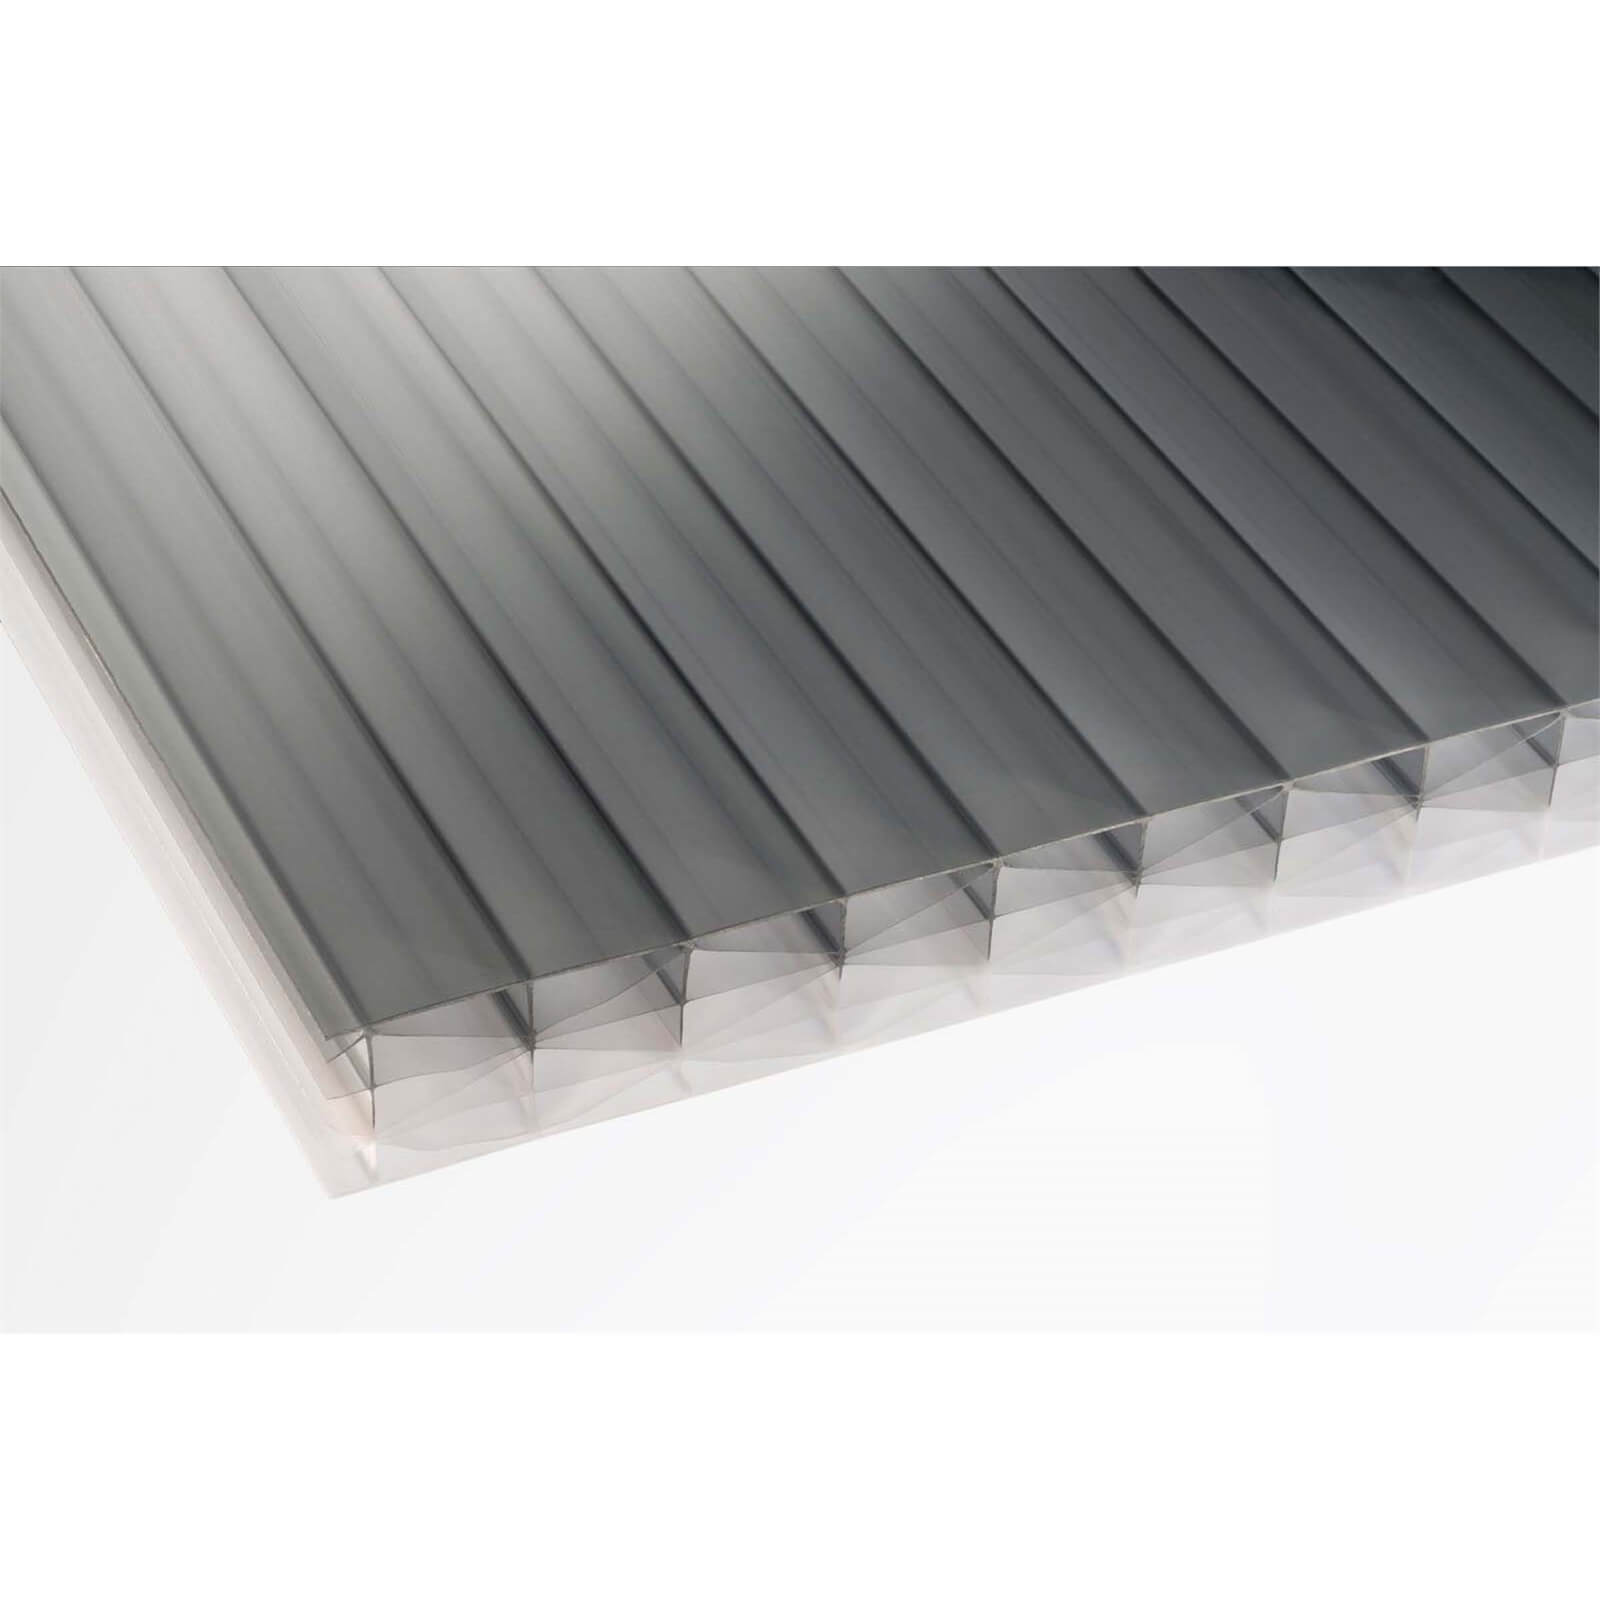 Photo of Corotherm Heatguard Opal Roof Sheet 3000x700x25mm - Pack 5